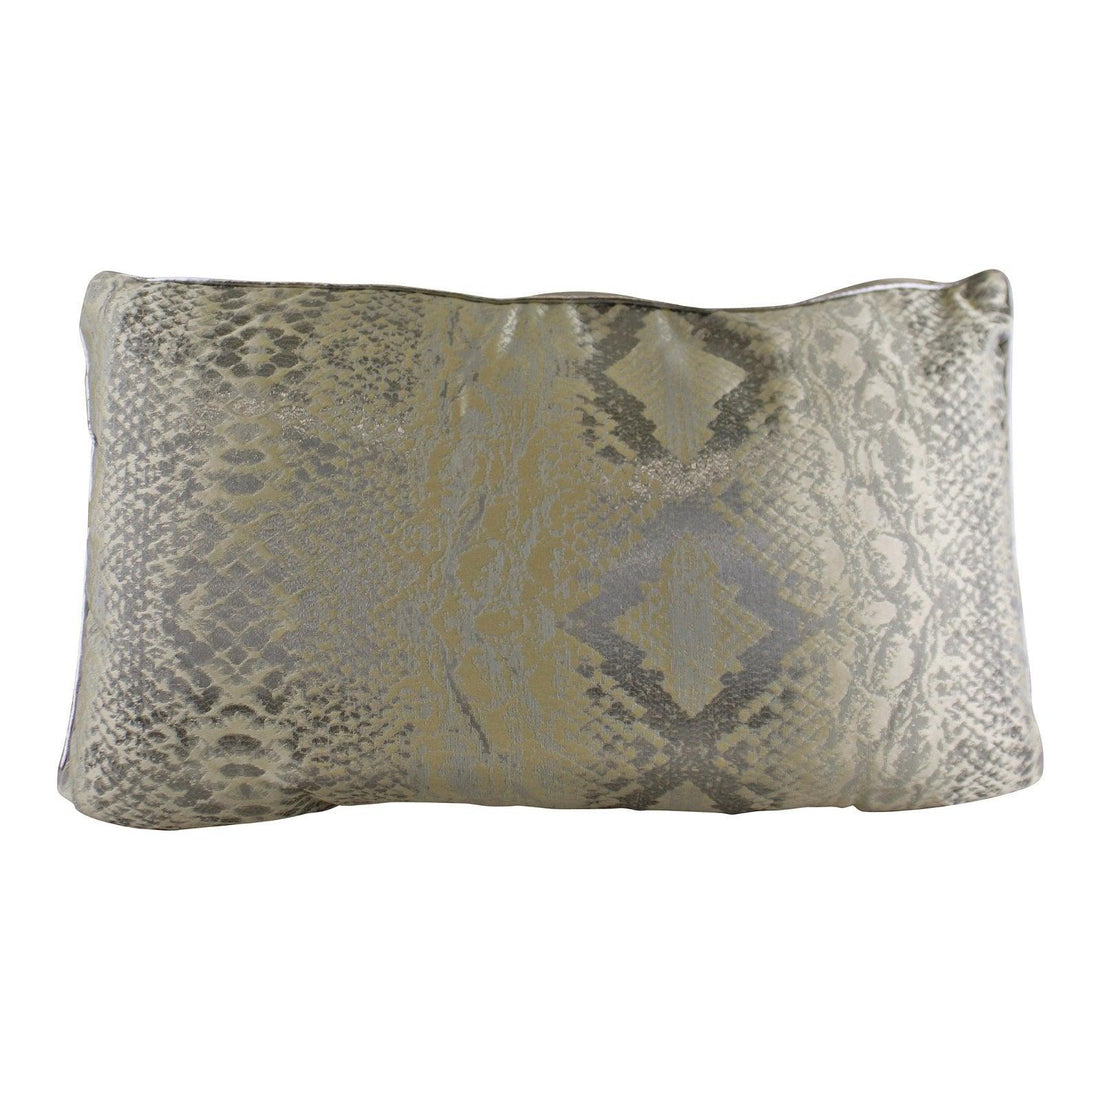 Rectangular Scatter Cushion, Snake Print Design, 30x50cm - £16.99 - Throw Pillows 